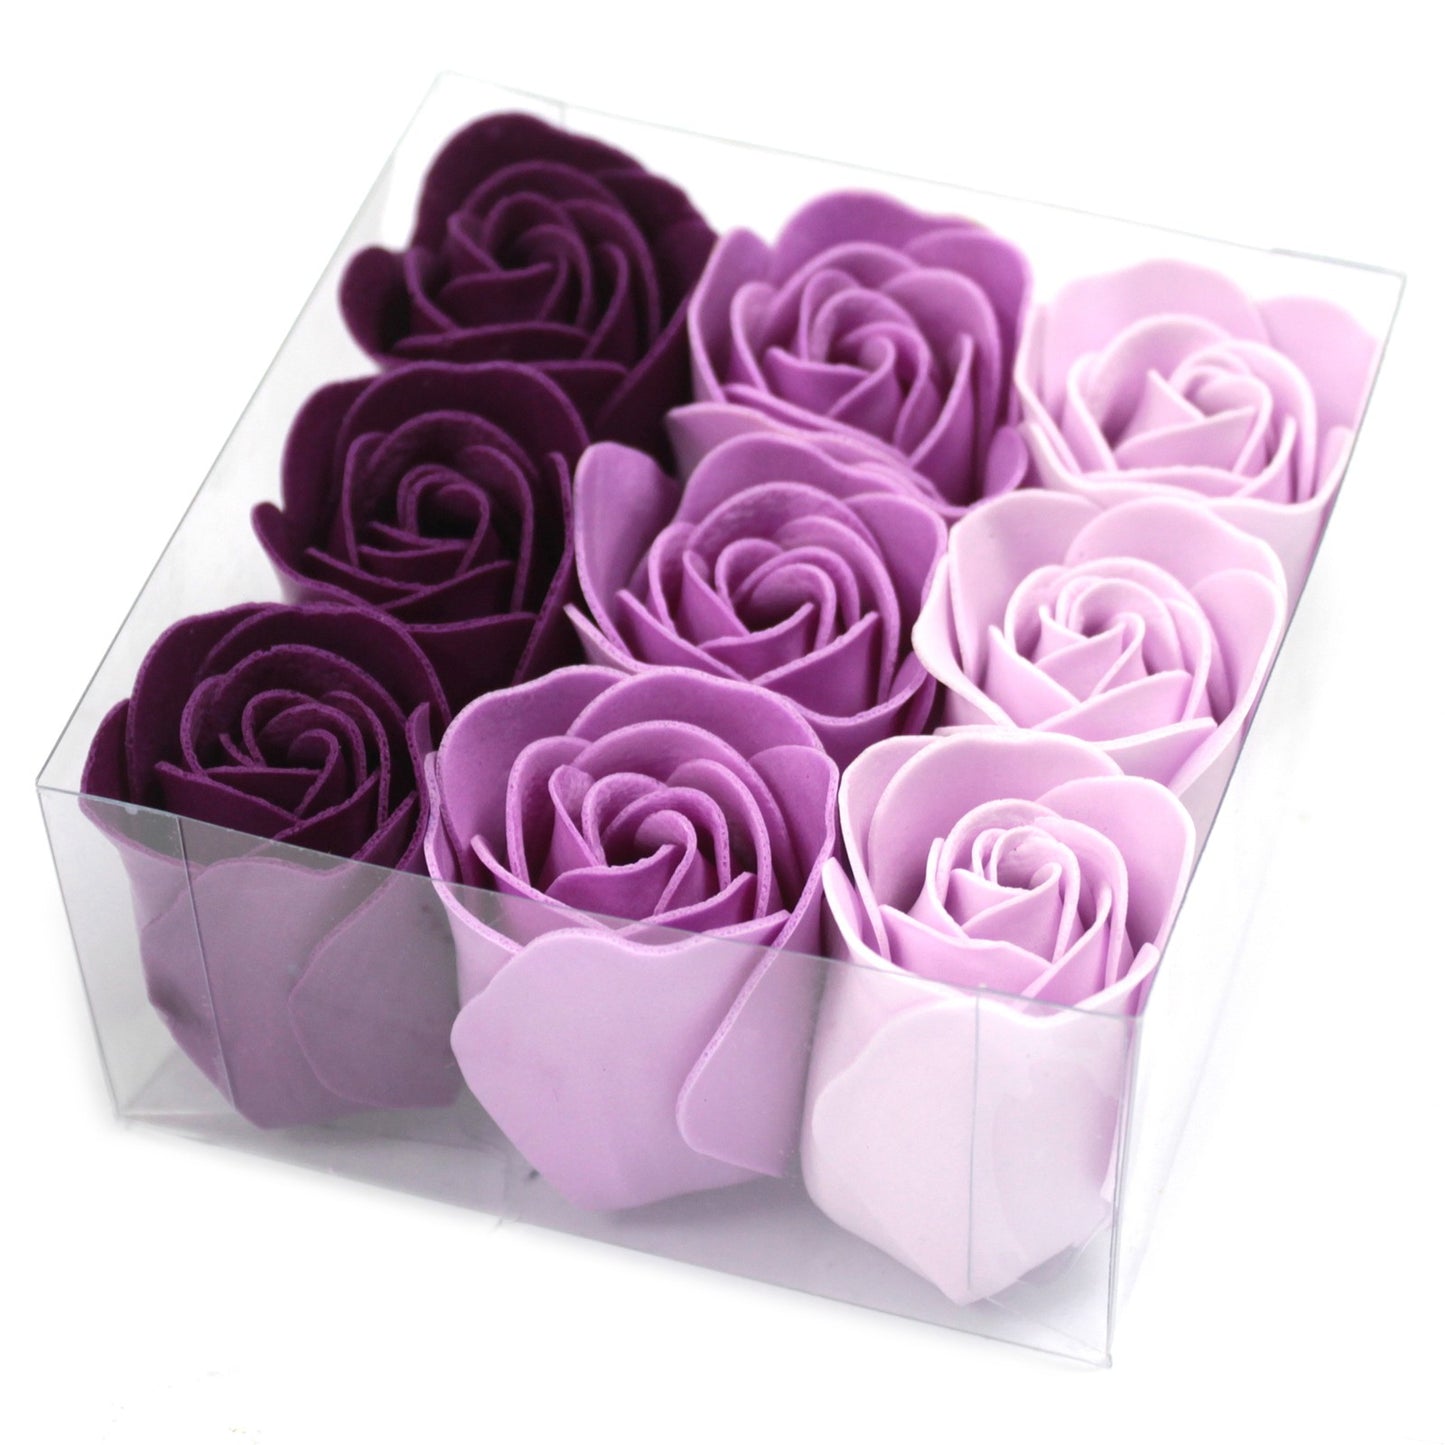 Set of 9 Soap Flowers - Lavender Roses